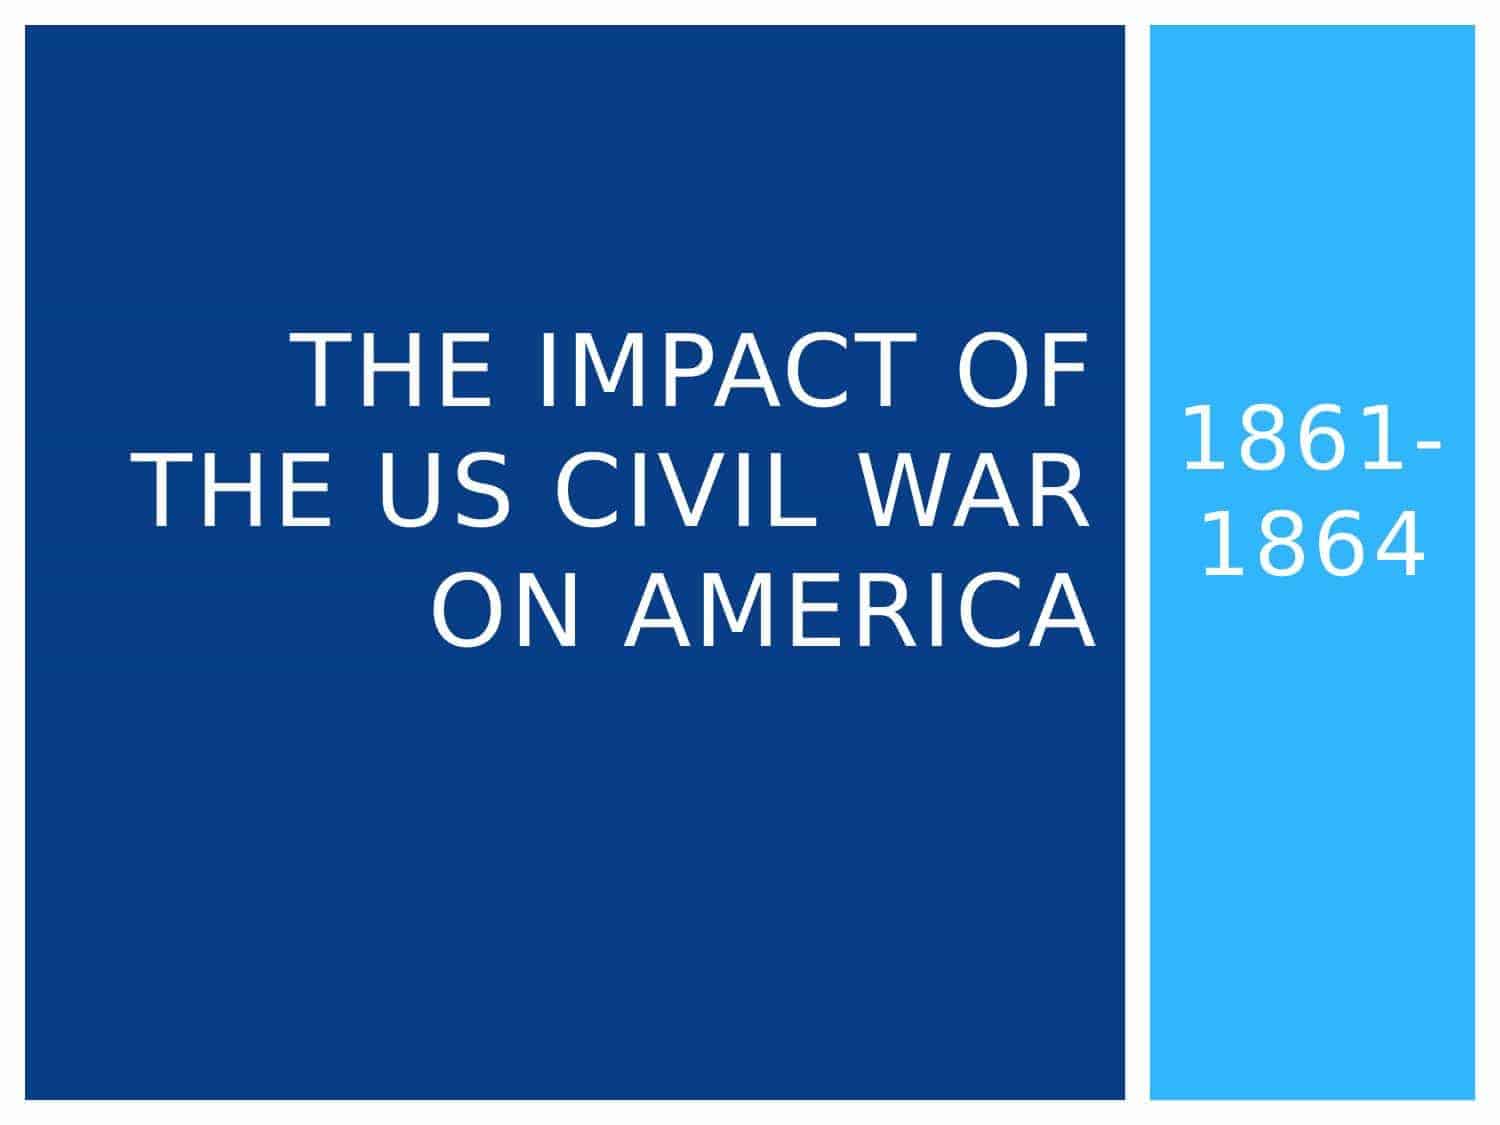 Civil War and Civil Liberties History Resources